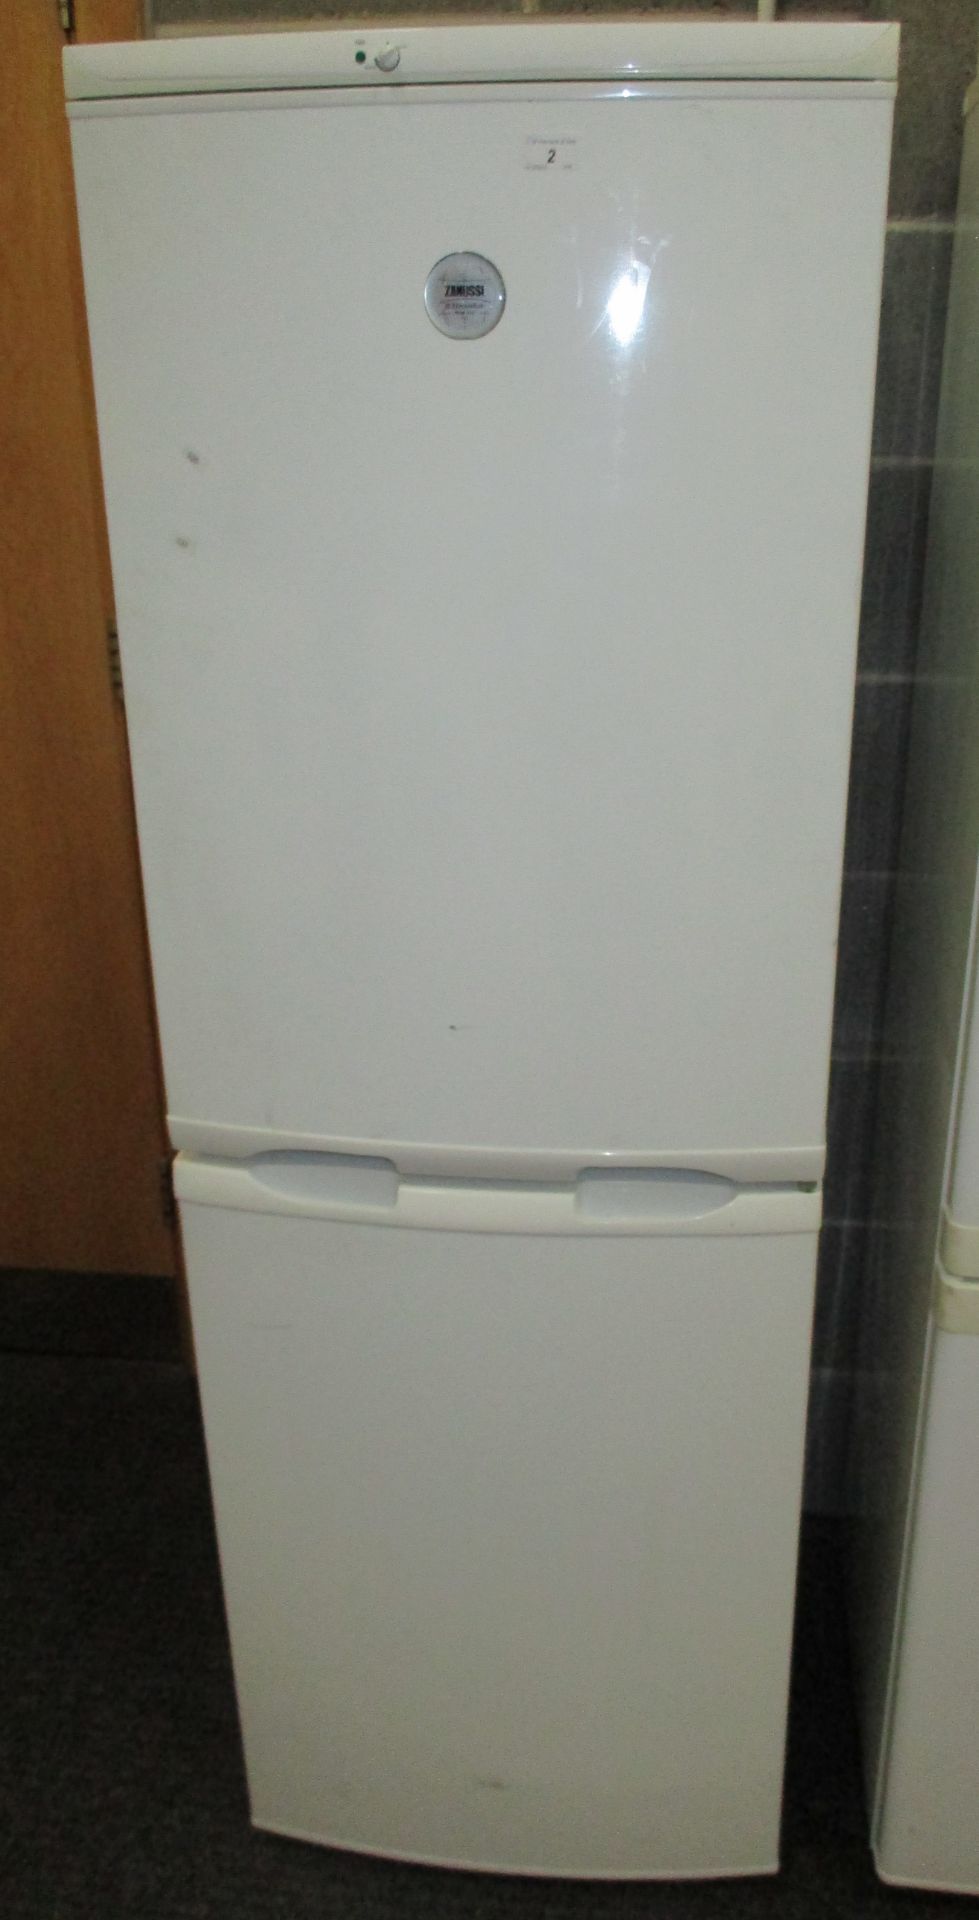 An Electrolux Zanussi frost free upright fridge freezer